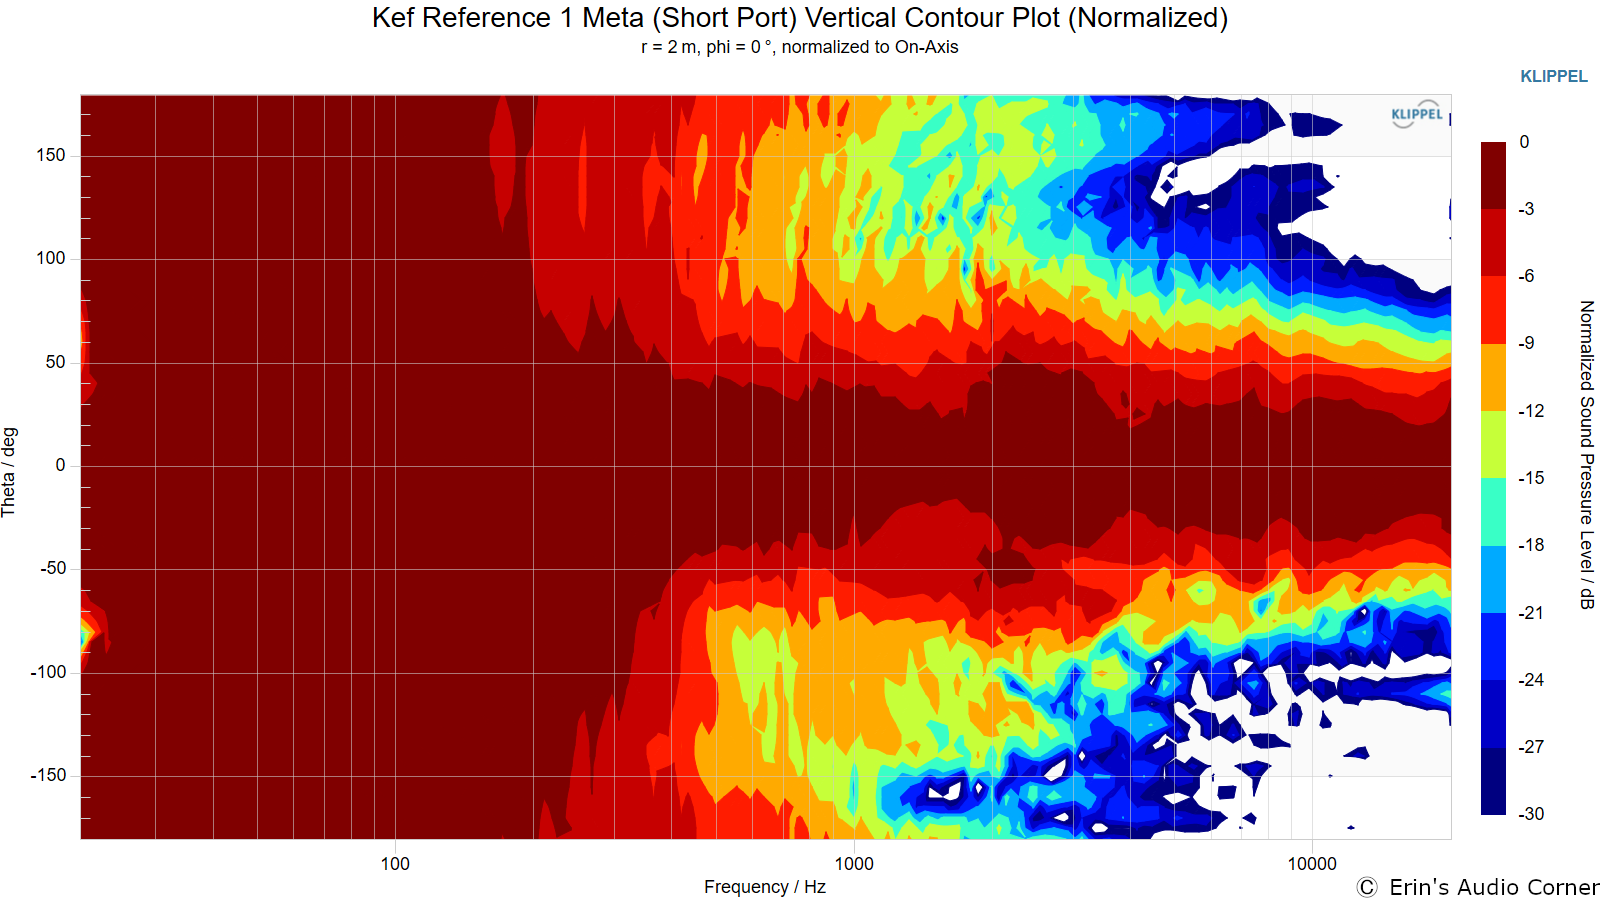 Kef Reference 1 Meta (Short Port) Vertical Contour Plot (Normalized).png